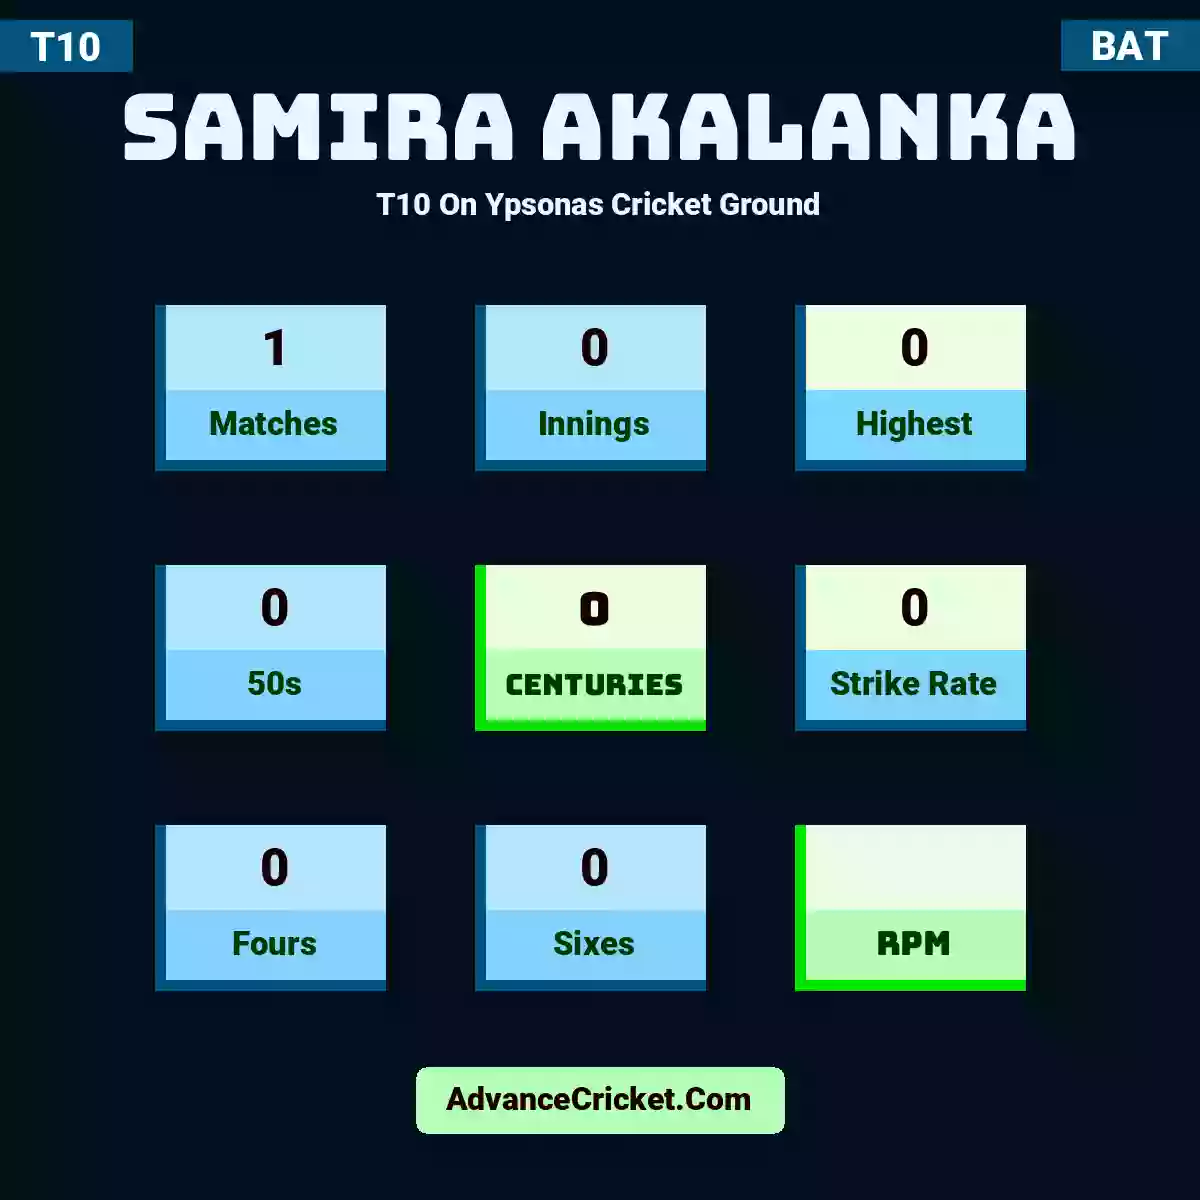 Samira Akalanka T10  On Ypsonas Cricket Ground, Samira Akalanka played 1 matches, scored 0 runs as highest, 0 half-centuries, and 0 centuries, with a strike rate of 0. S.Akalanka hit 0 fours and 0 sixes.